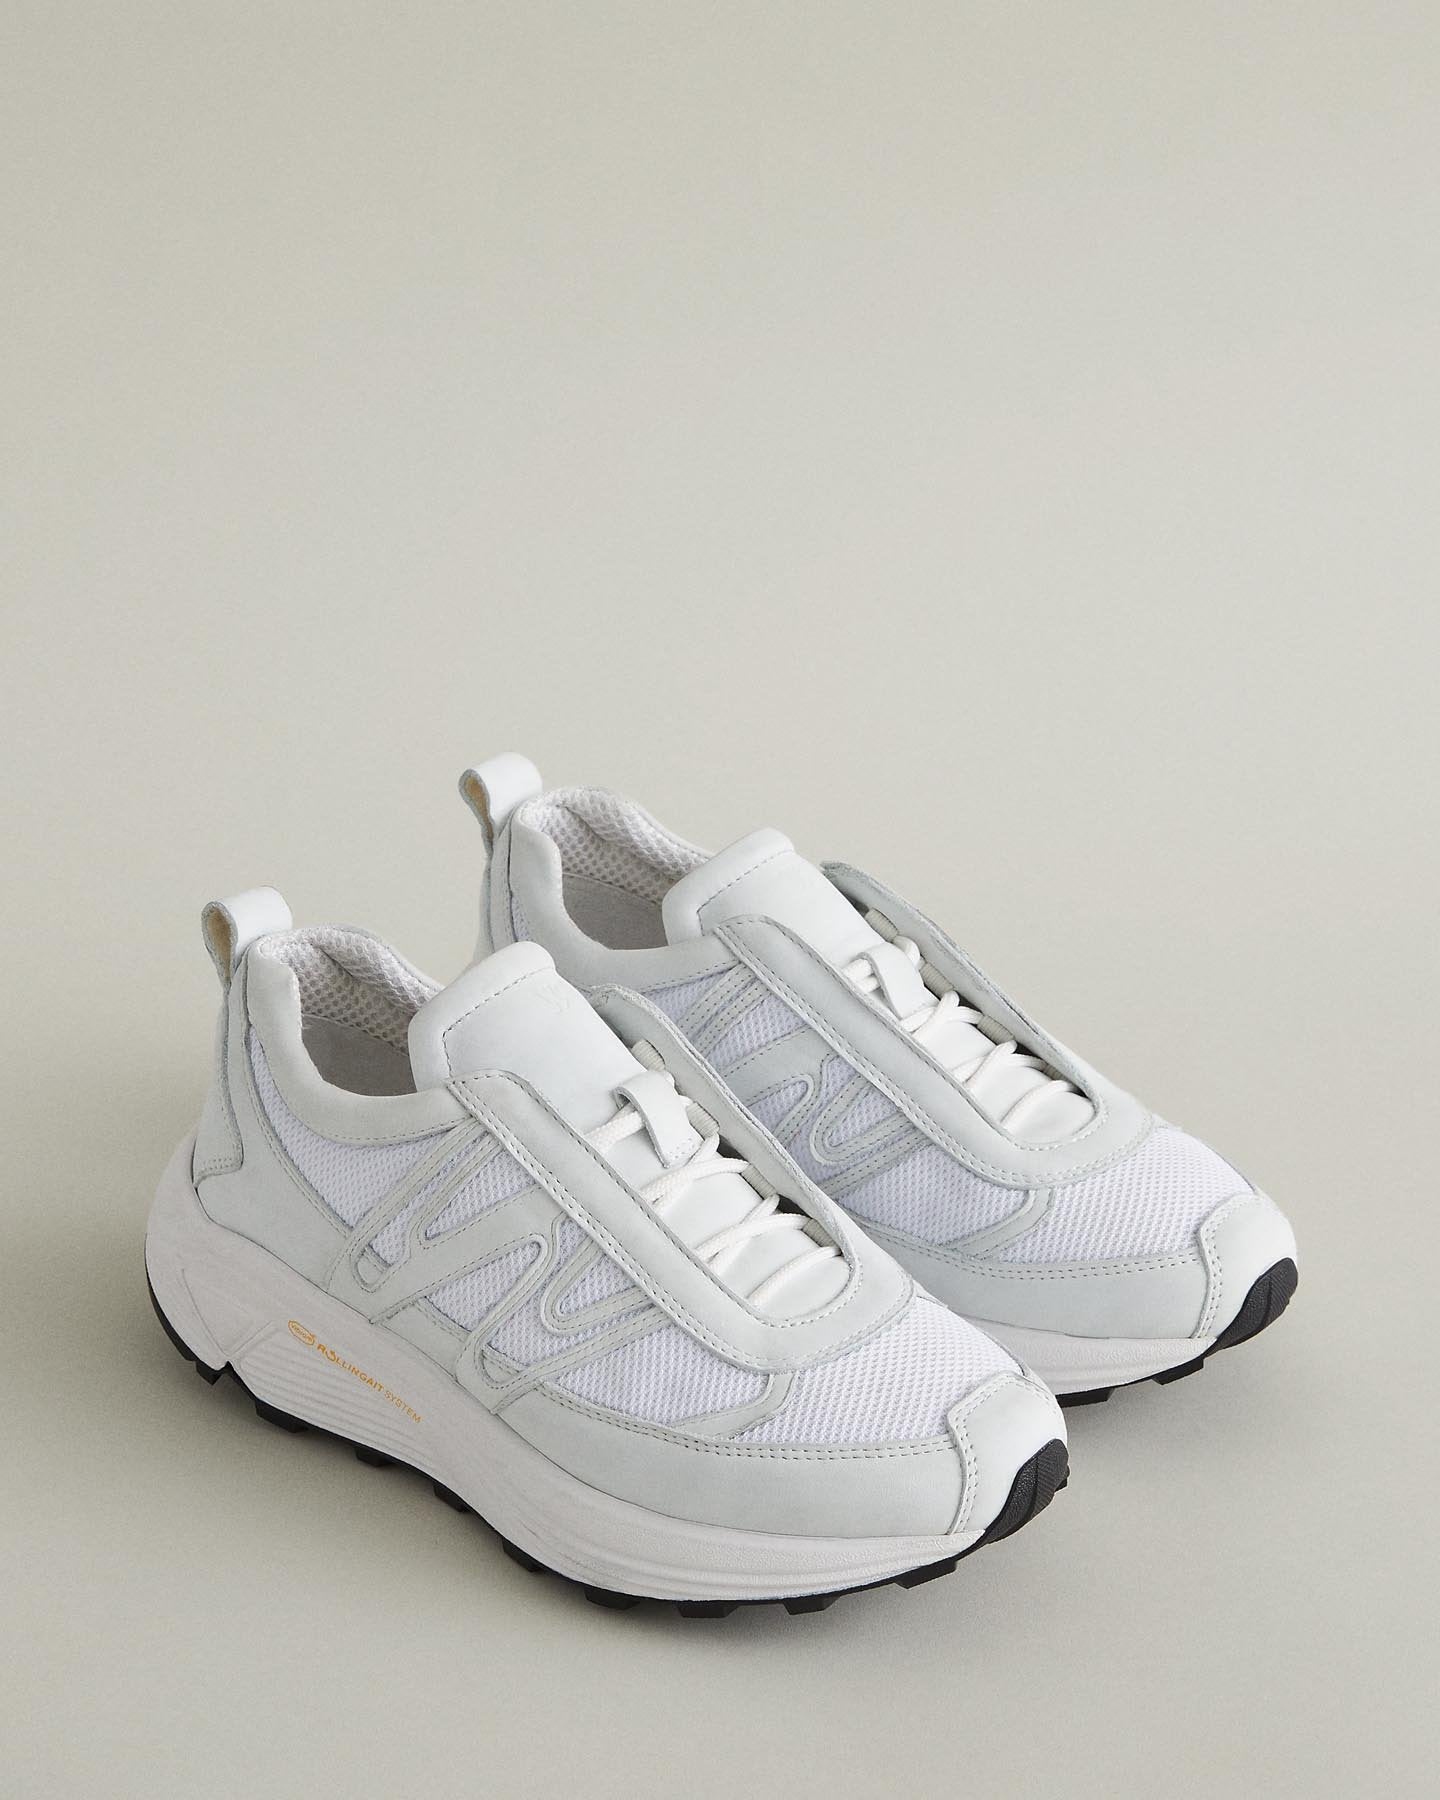 pretty white sneakers